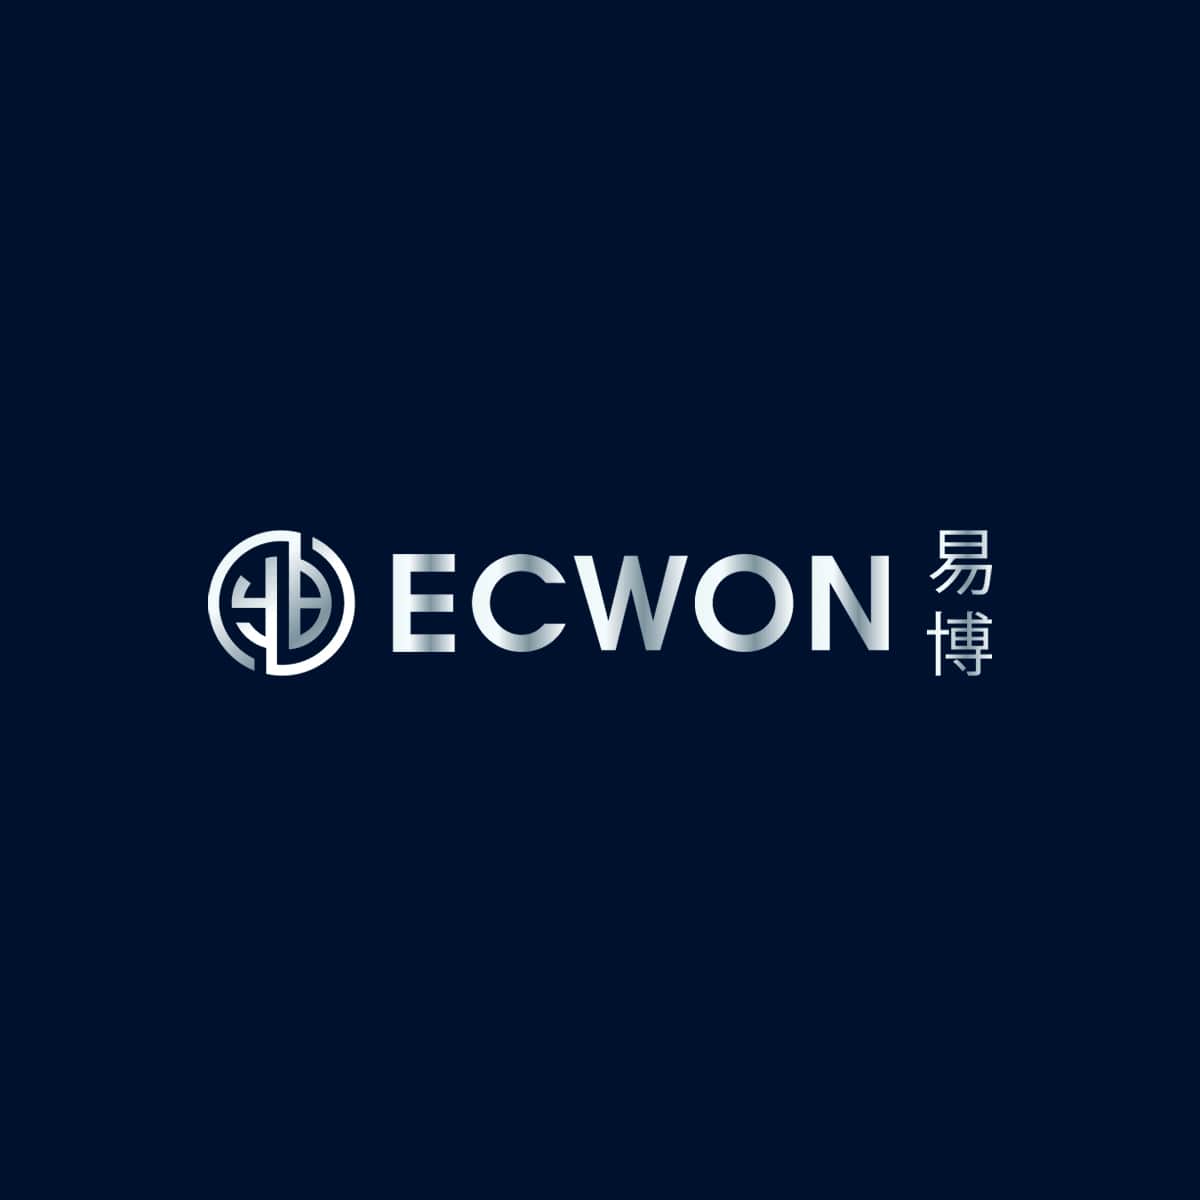 ECWON Online Casino Singapore Logo